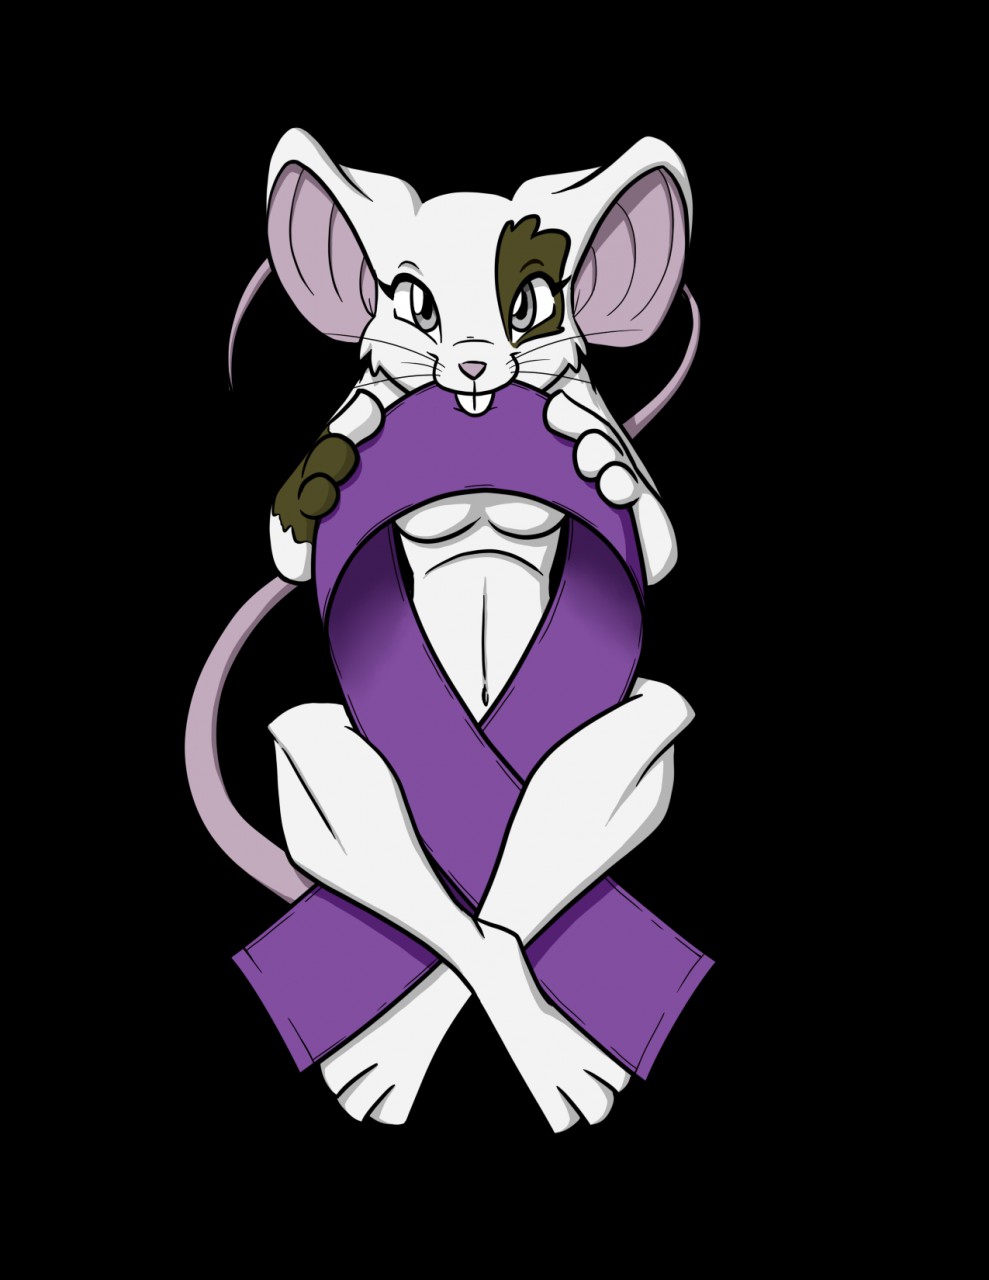 antonya_flynn cancer cancer_awareness cancer_ribbon cancer_survivor herm inkwell_pony intersex mammal mouse nude rodent